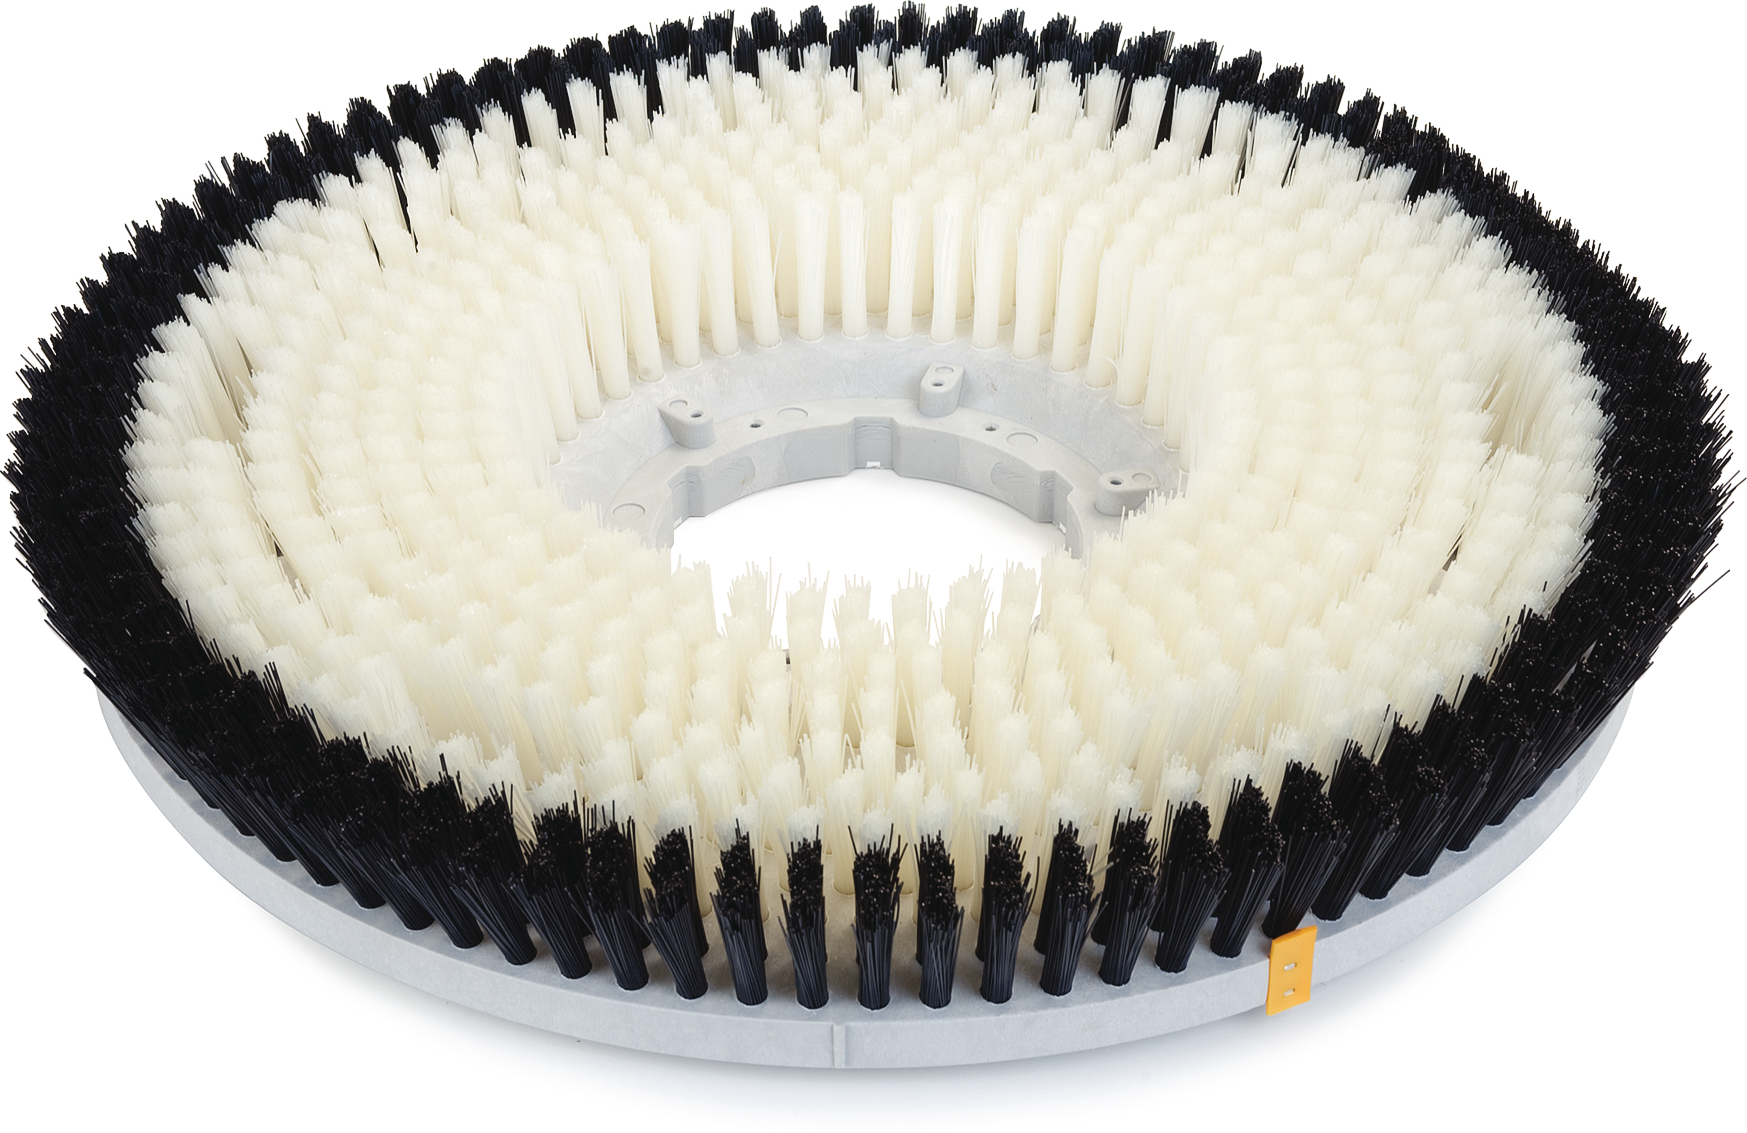 Colortech White-Black Karpet Kare Nylon Brush 18 - White-Black